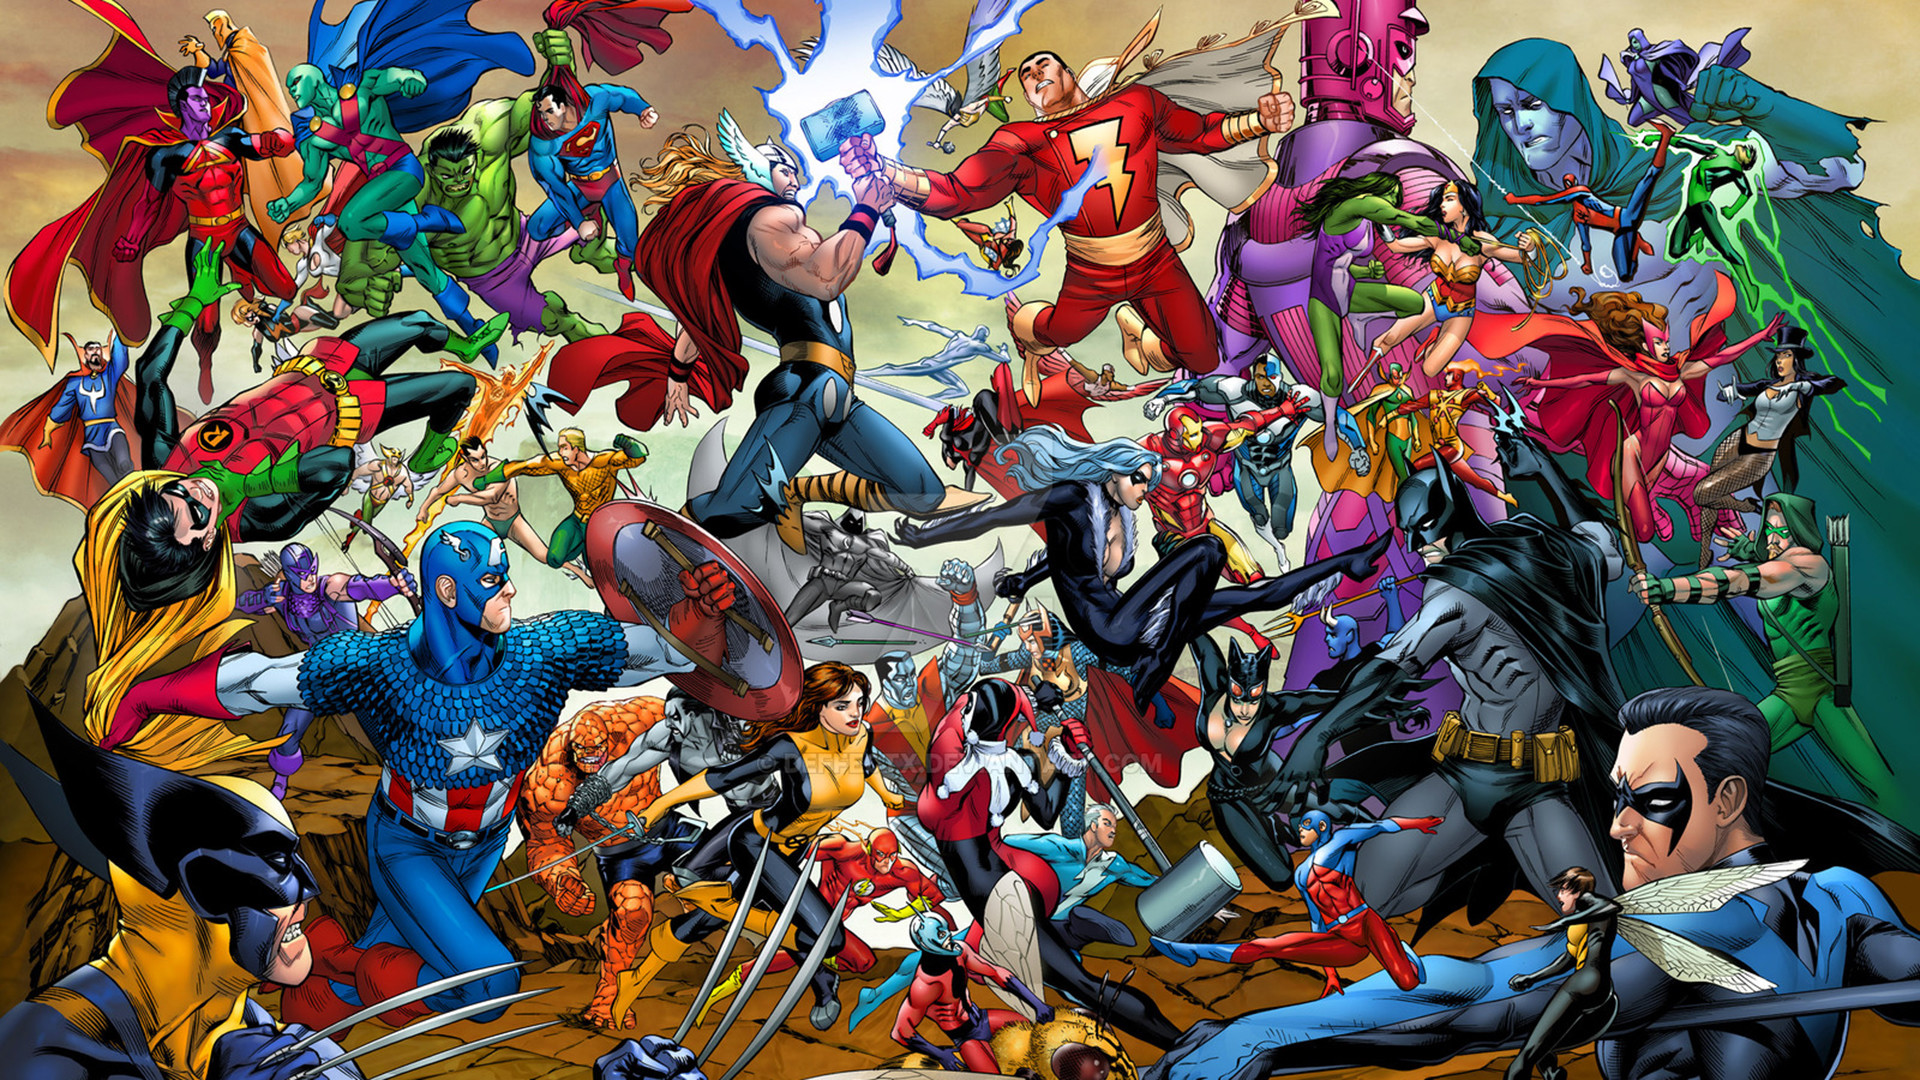 Marvel vs DC Wallpaper ·① WallpaperTag